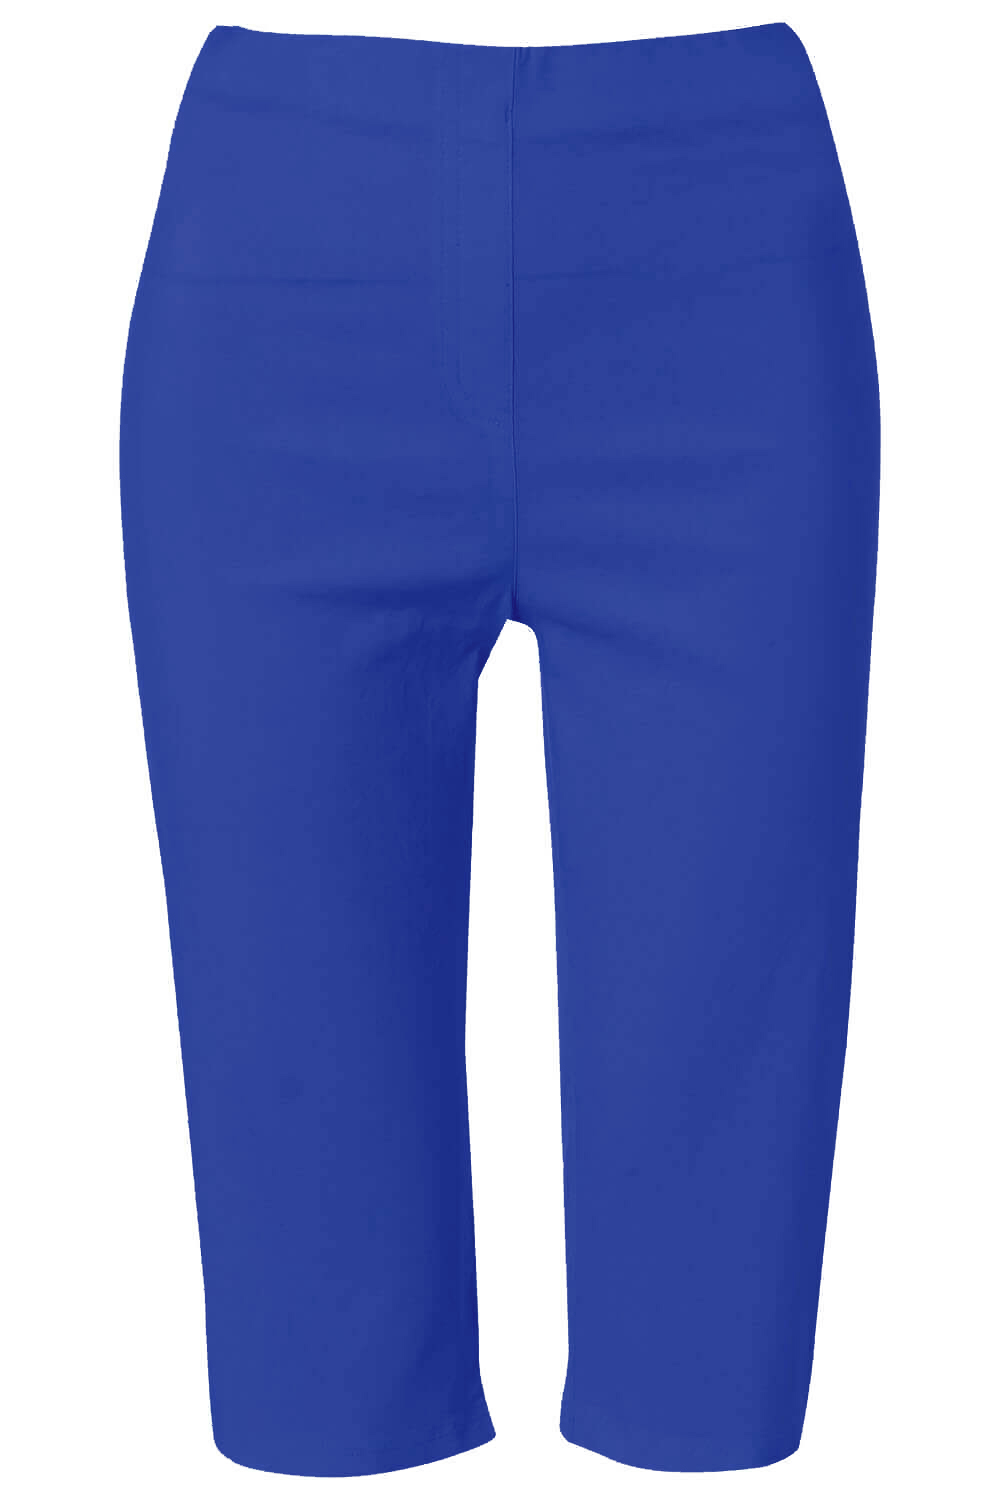 Royal Blue Knee Length Stretch Shorts, Image 6 of 6